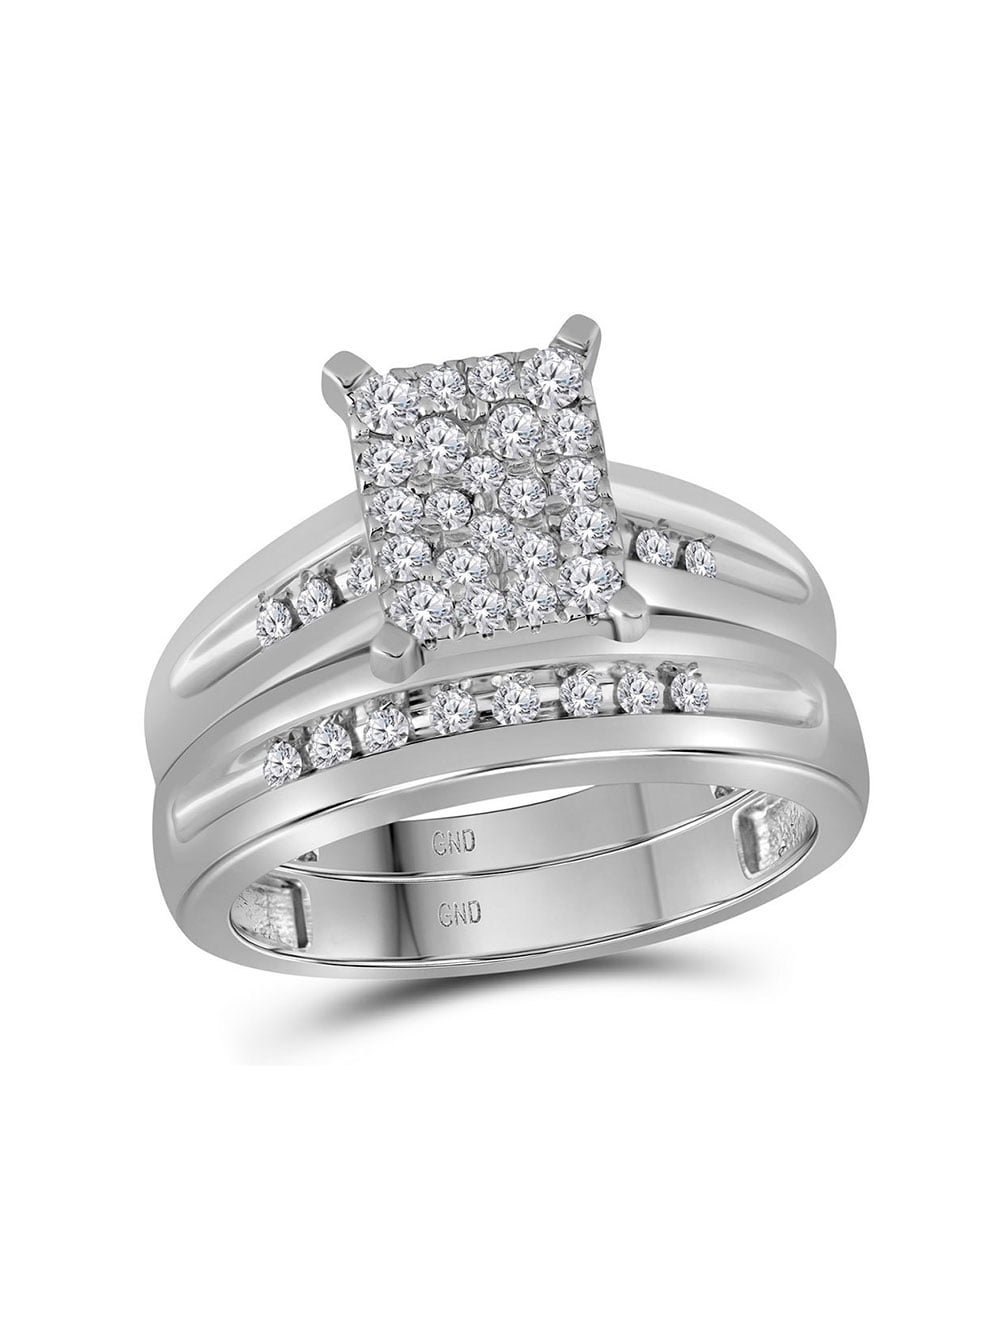 Details about   8 MM White Round Diamond Engagement Ring Wedding Band Set 14K White Gold Finish 